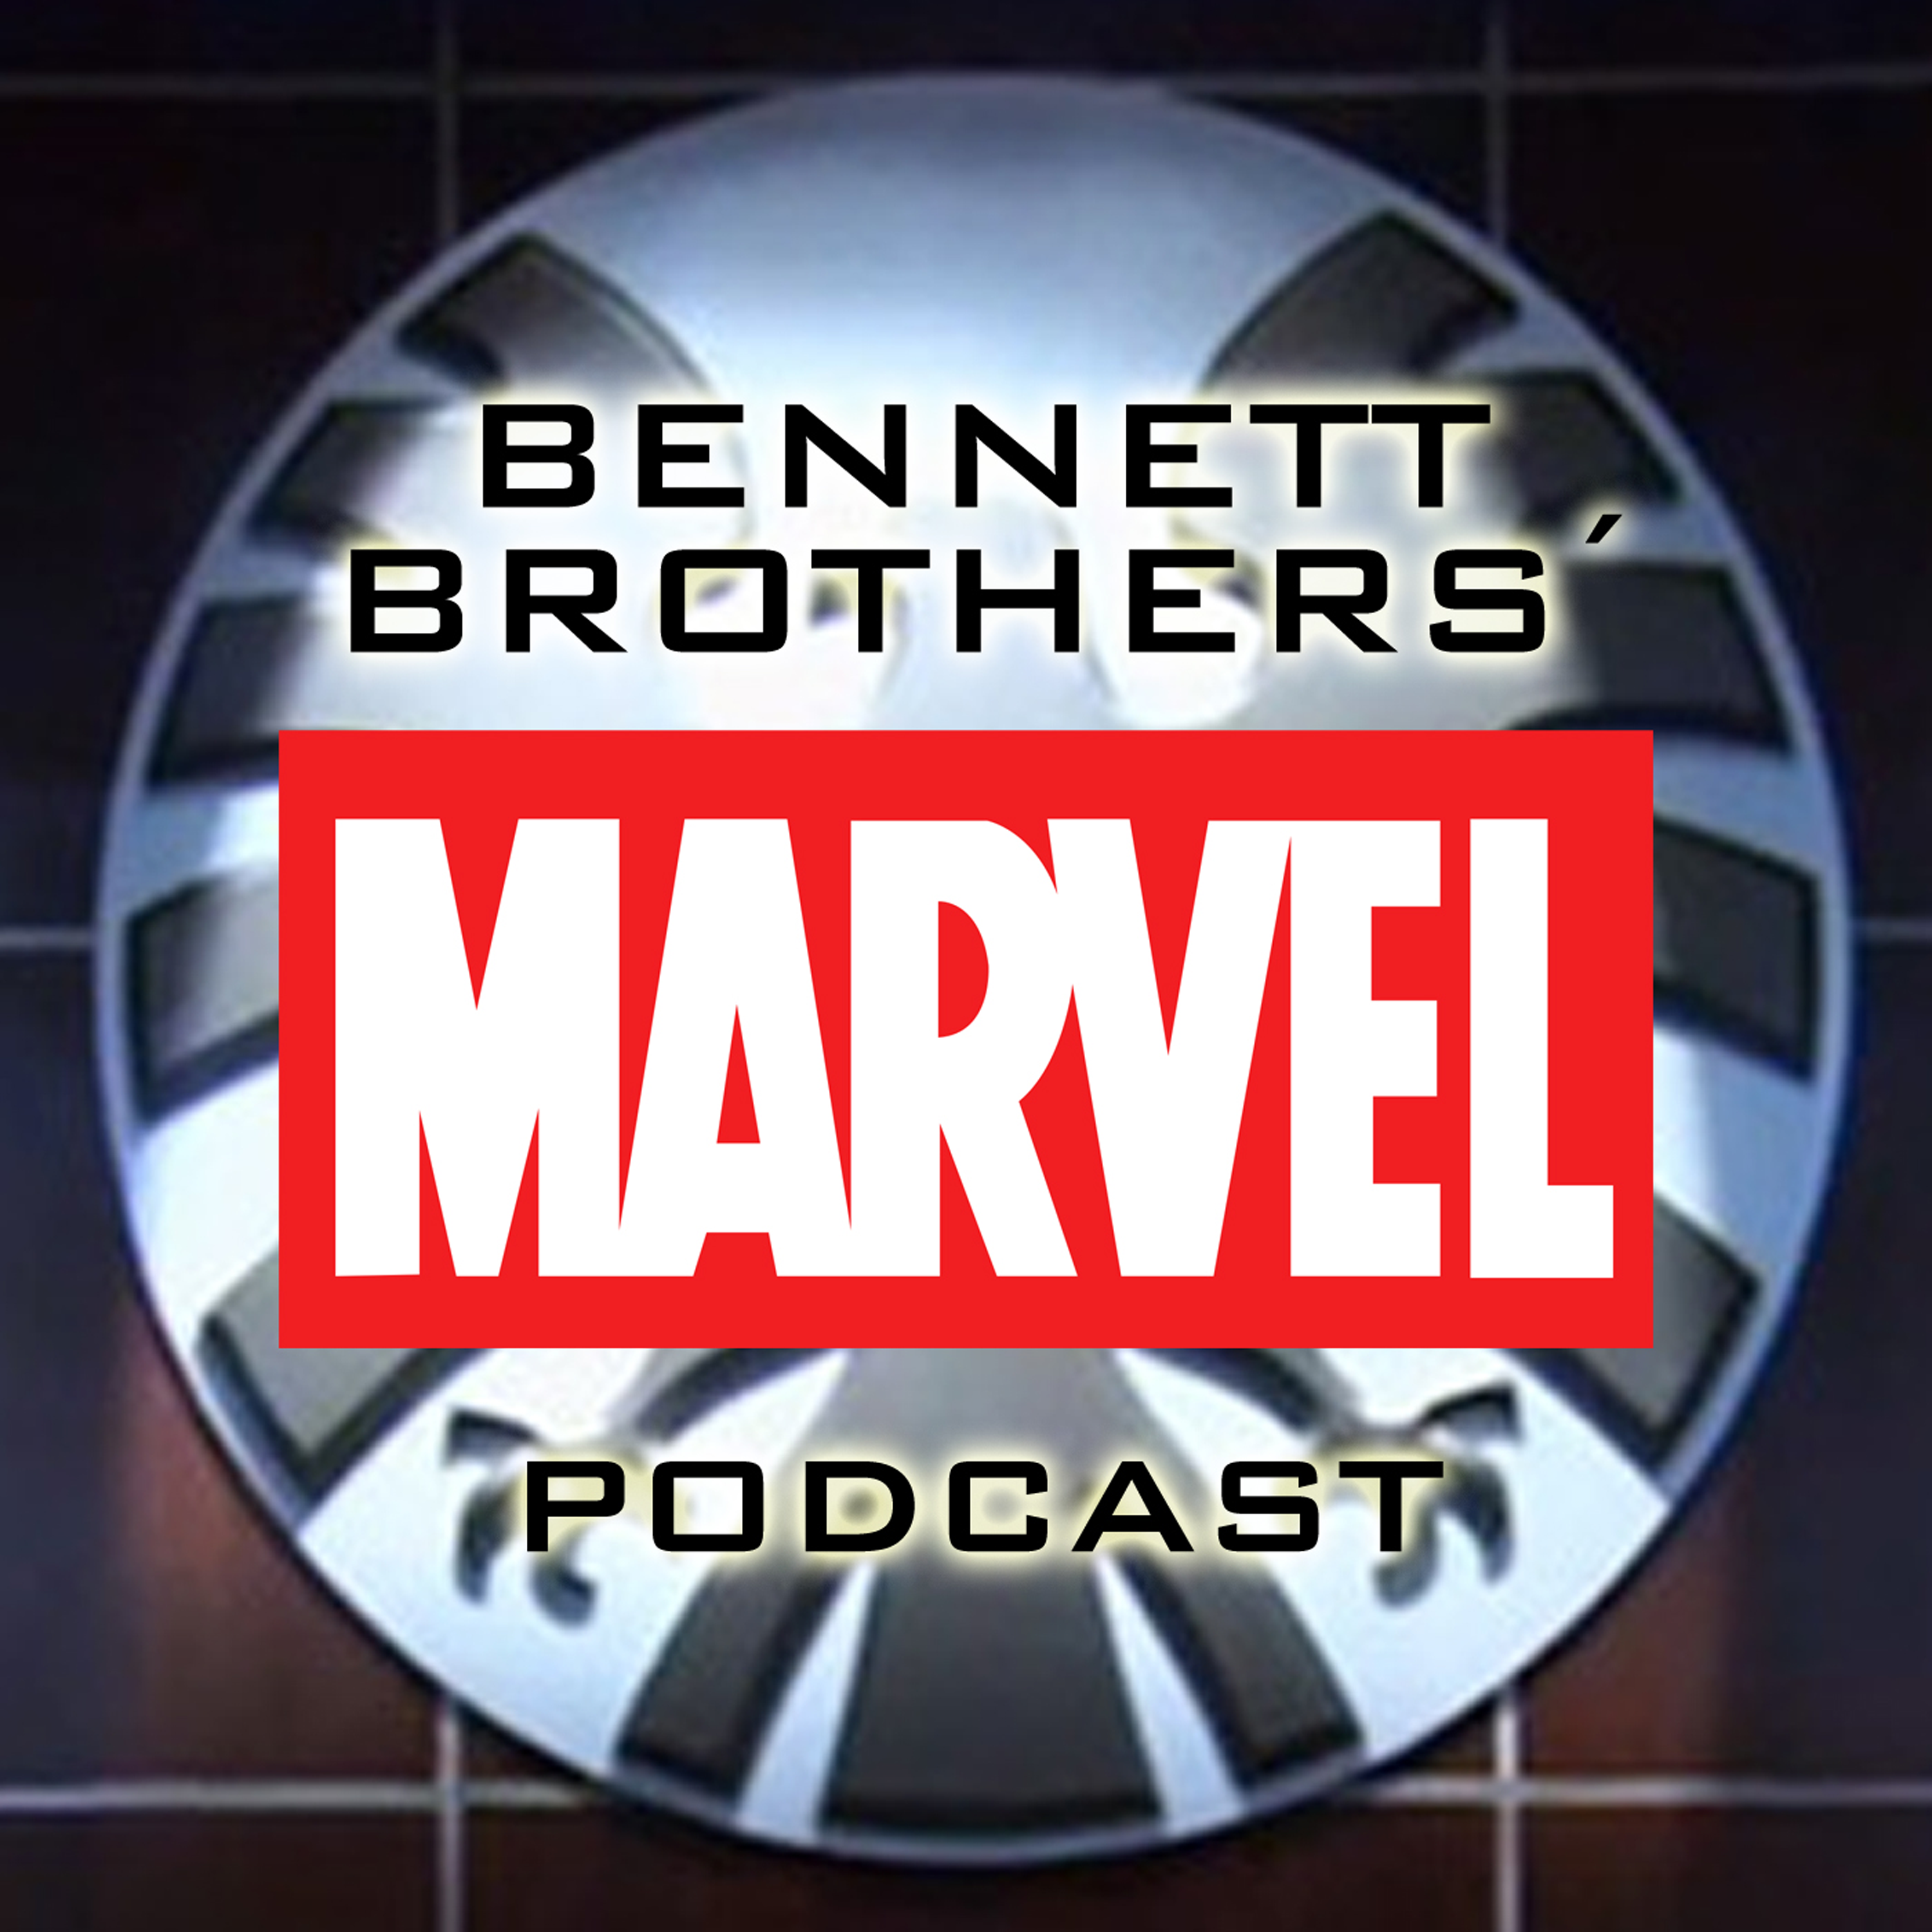 Bennett Brothers' Marvel Podcasts